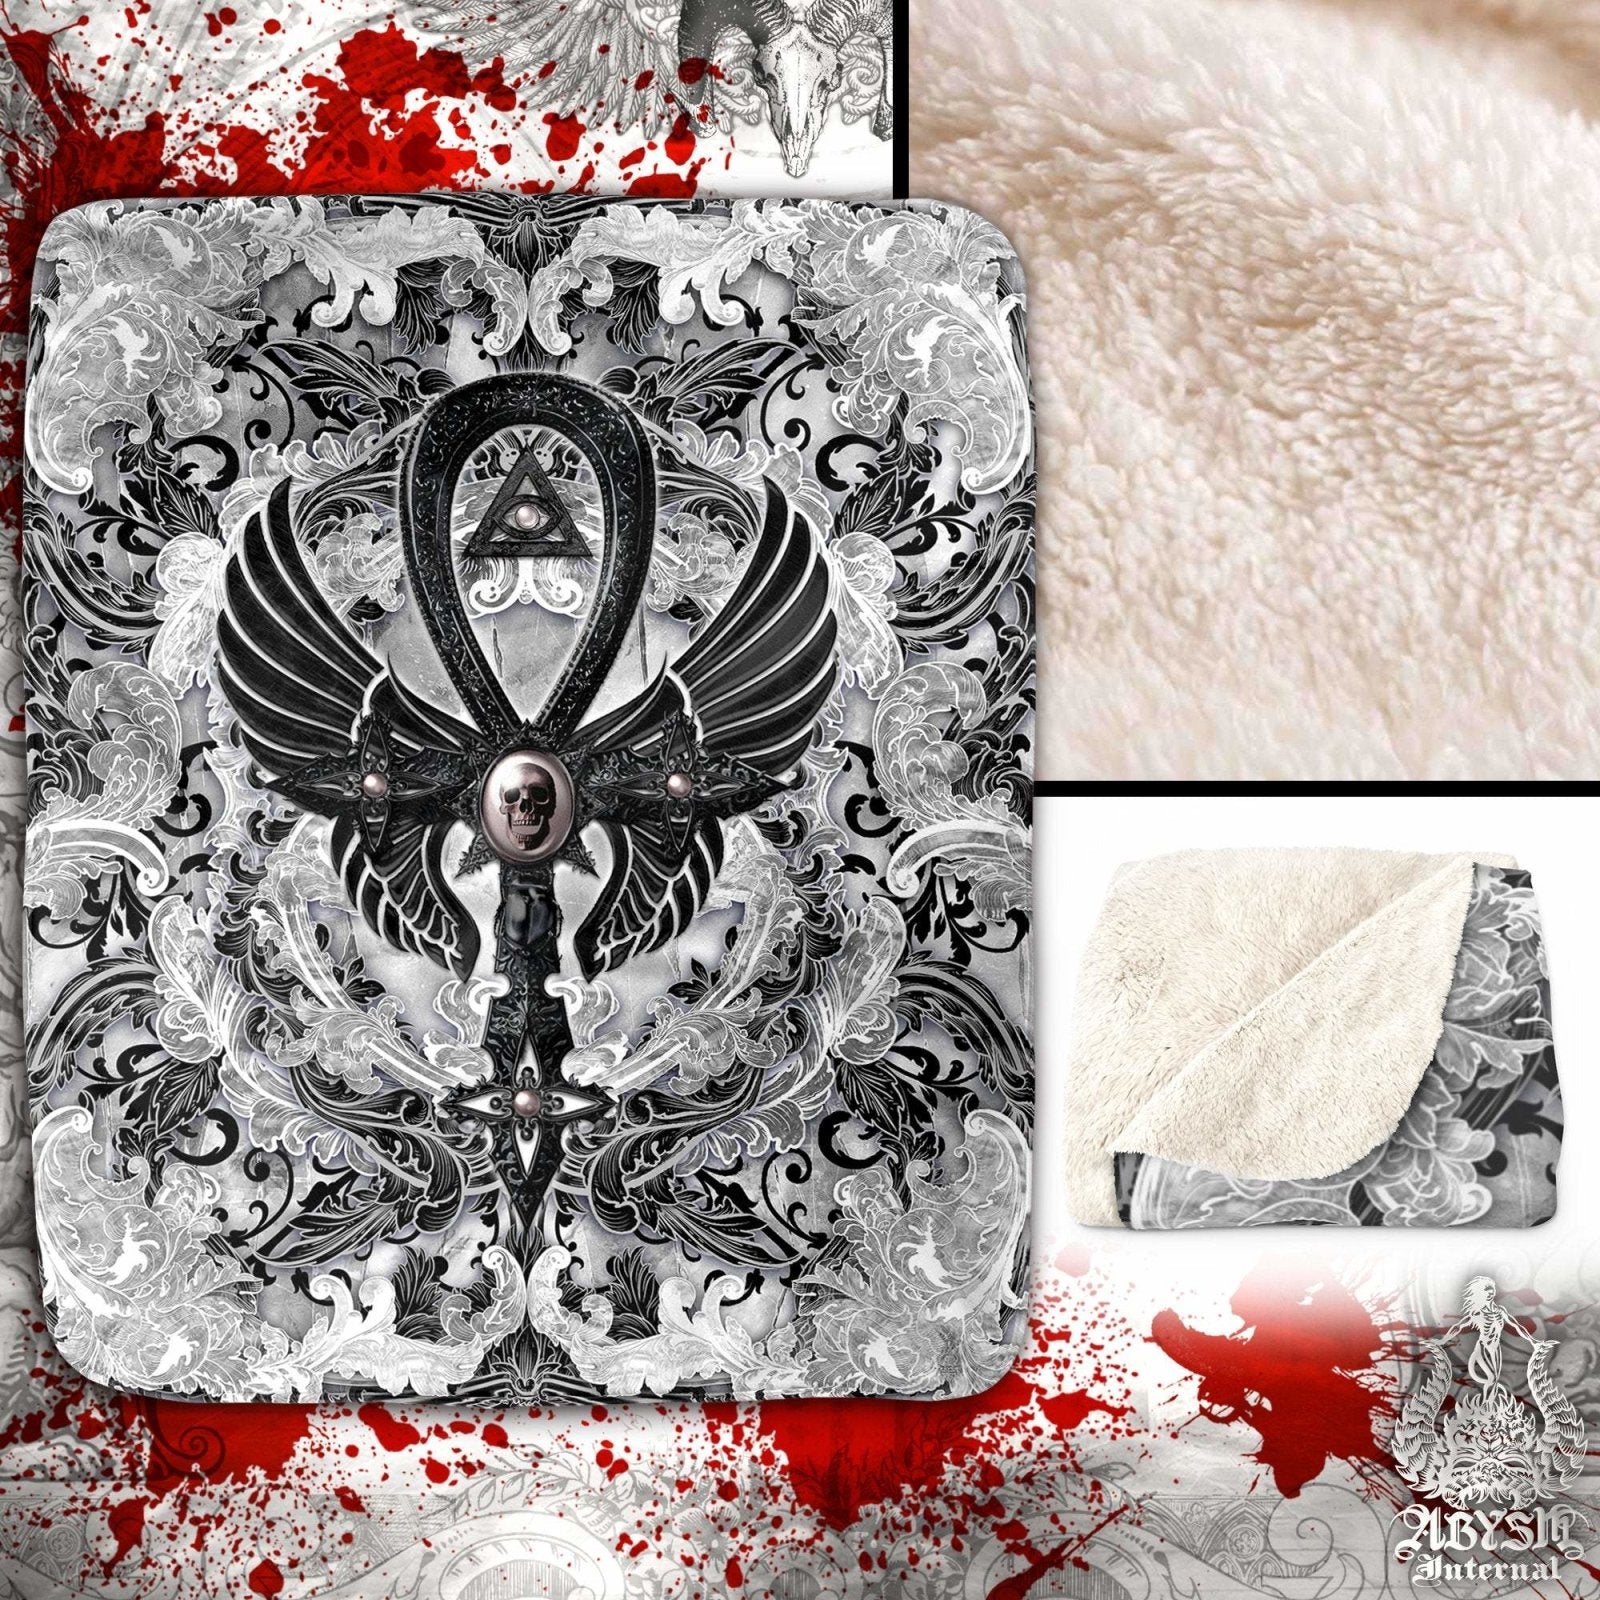 Gothic Throw Fleece Blanket, Goth Decor - Ankh Cross, White & Black - Abysm Internal